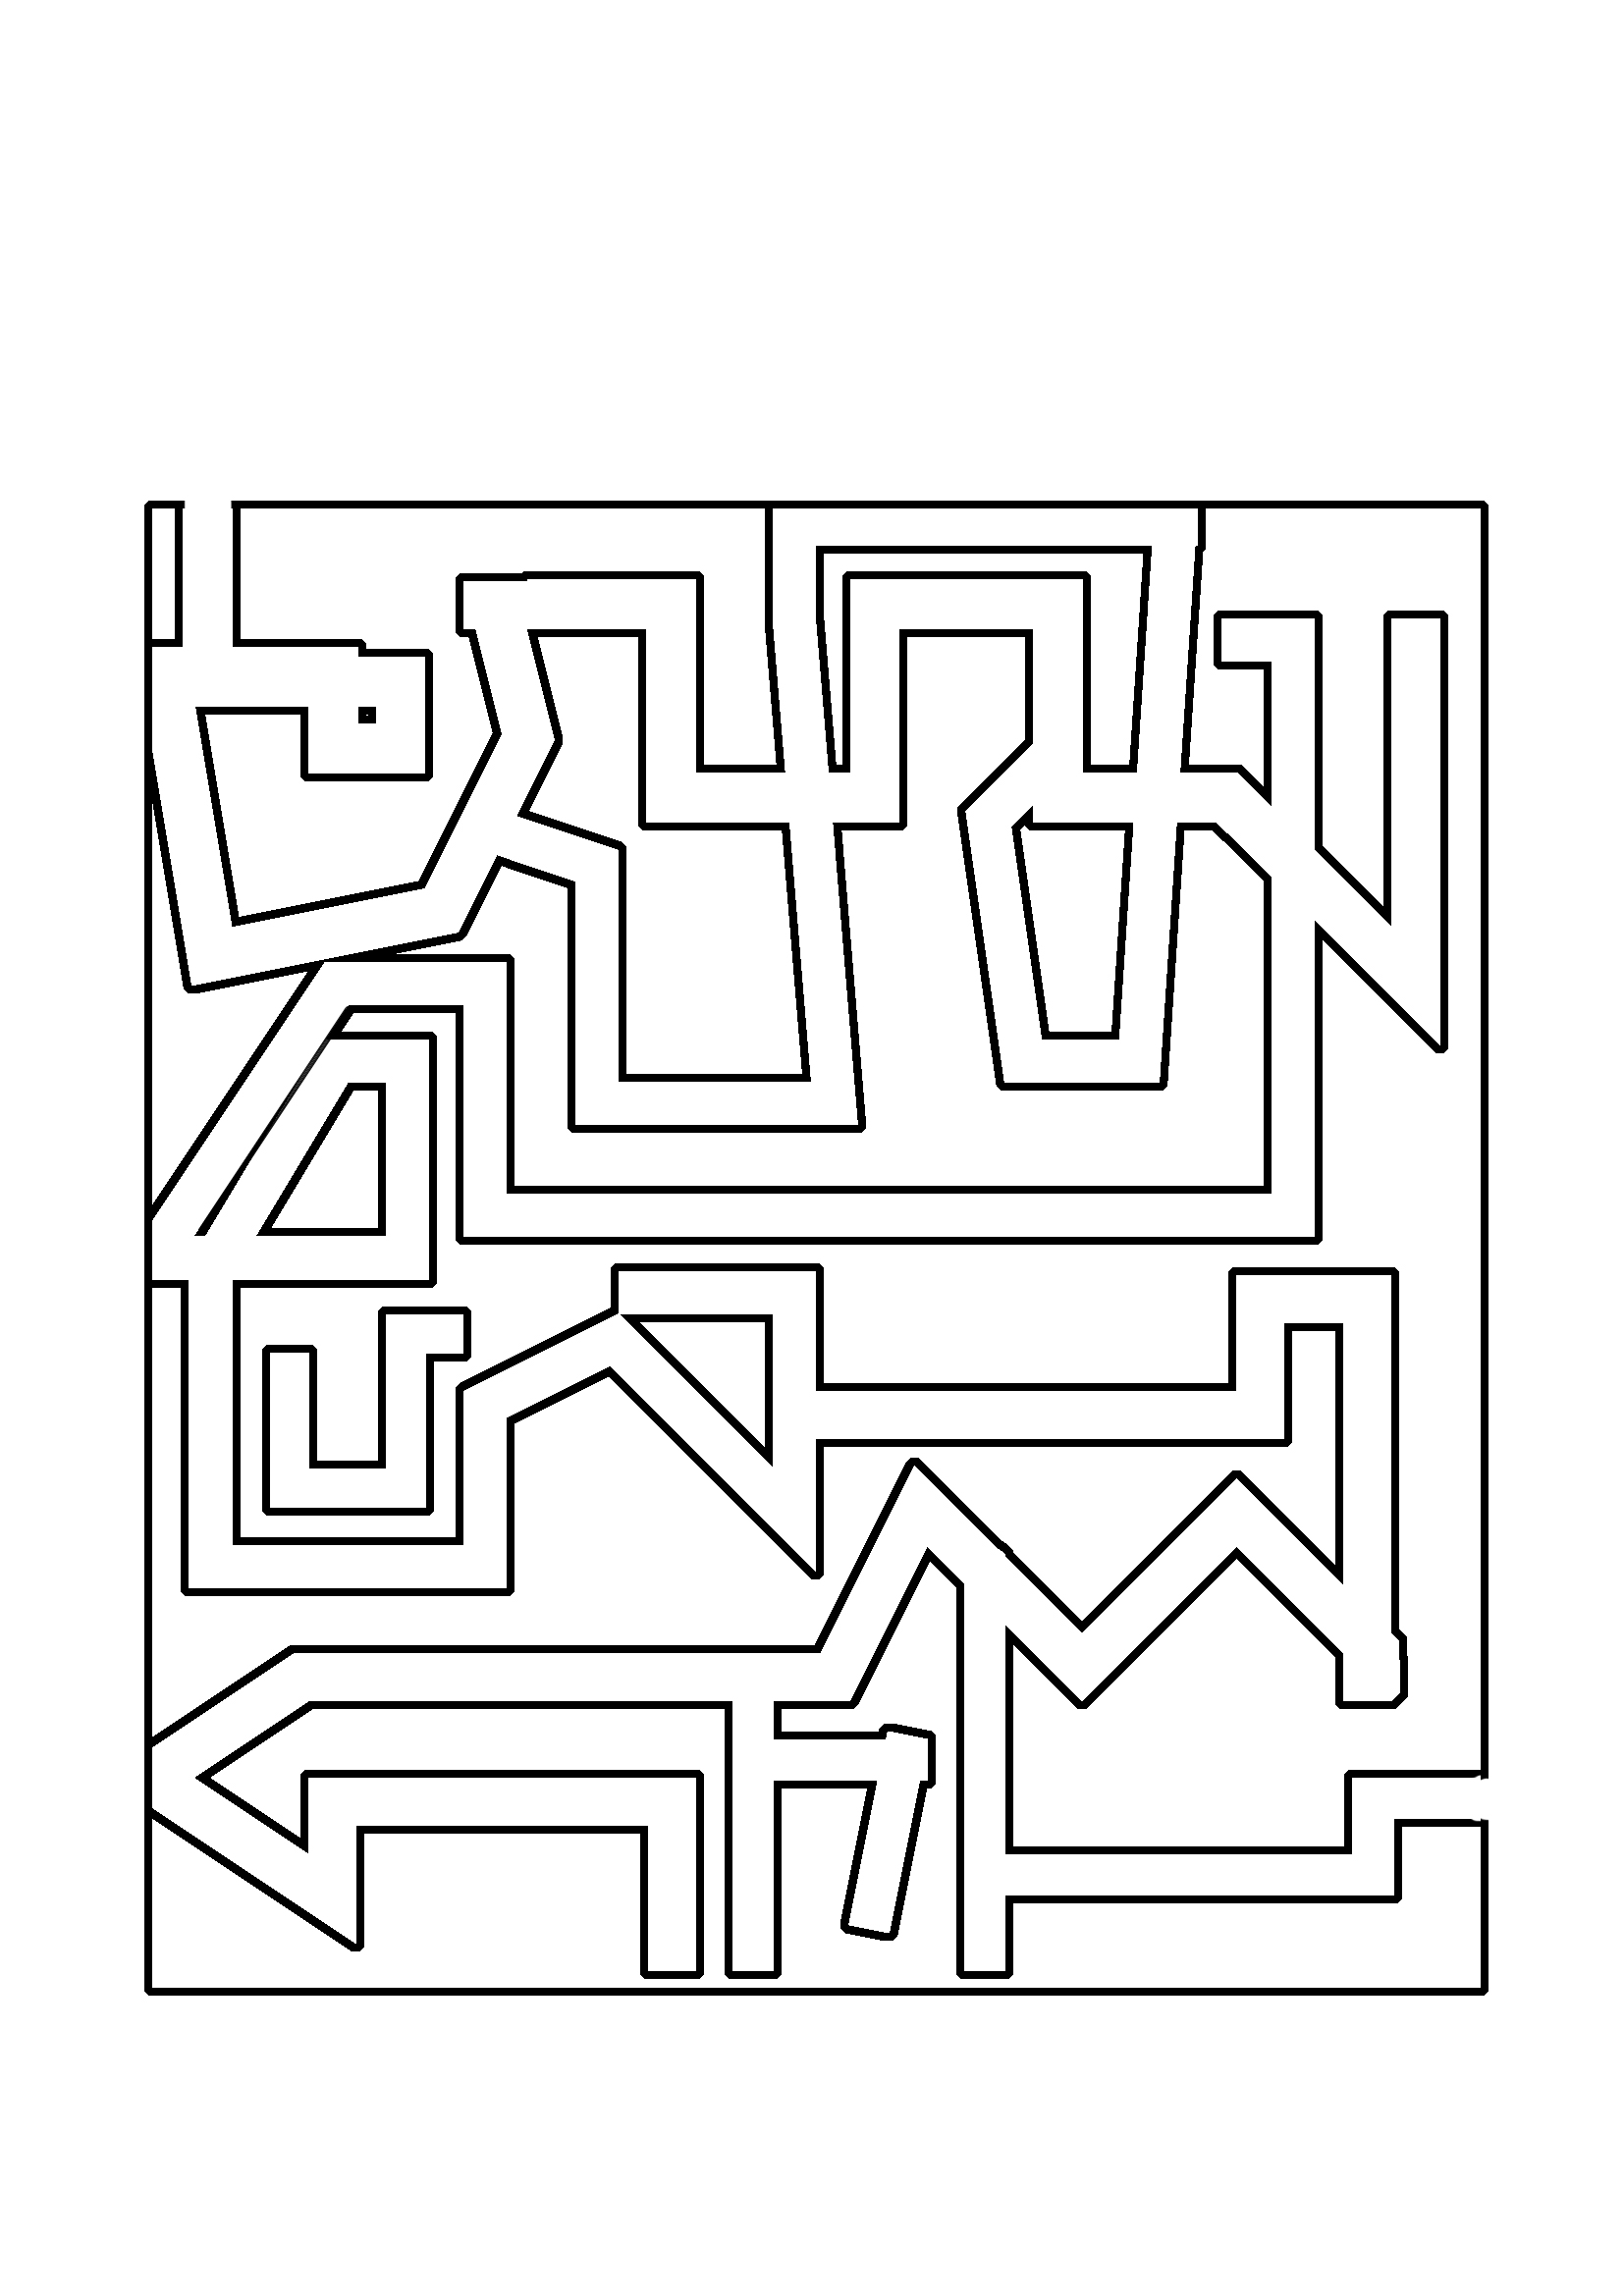 https://www.clipartqueen.com/image-files/geometrical-maze-puzzle.jpg